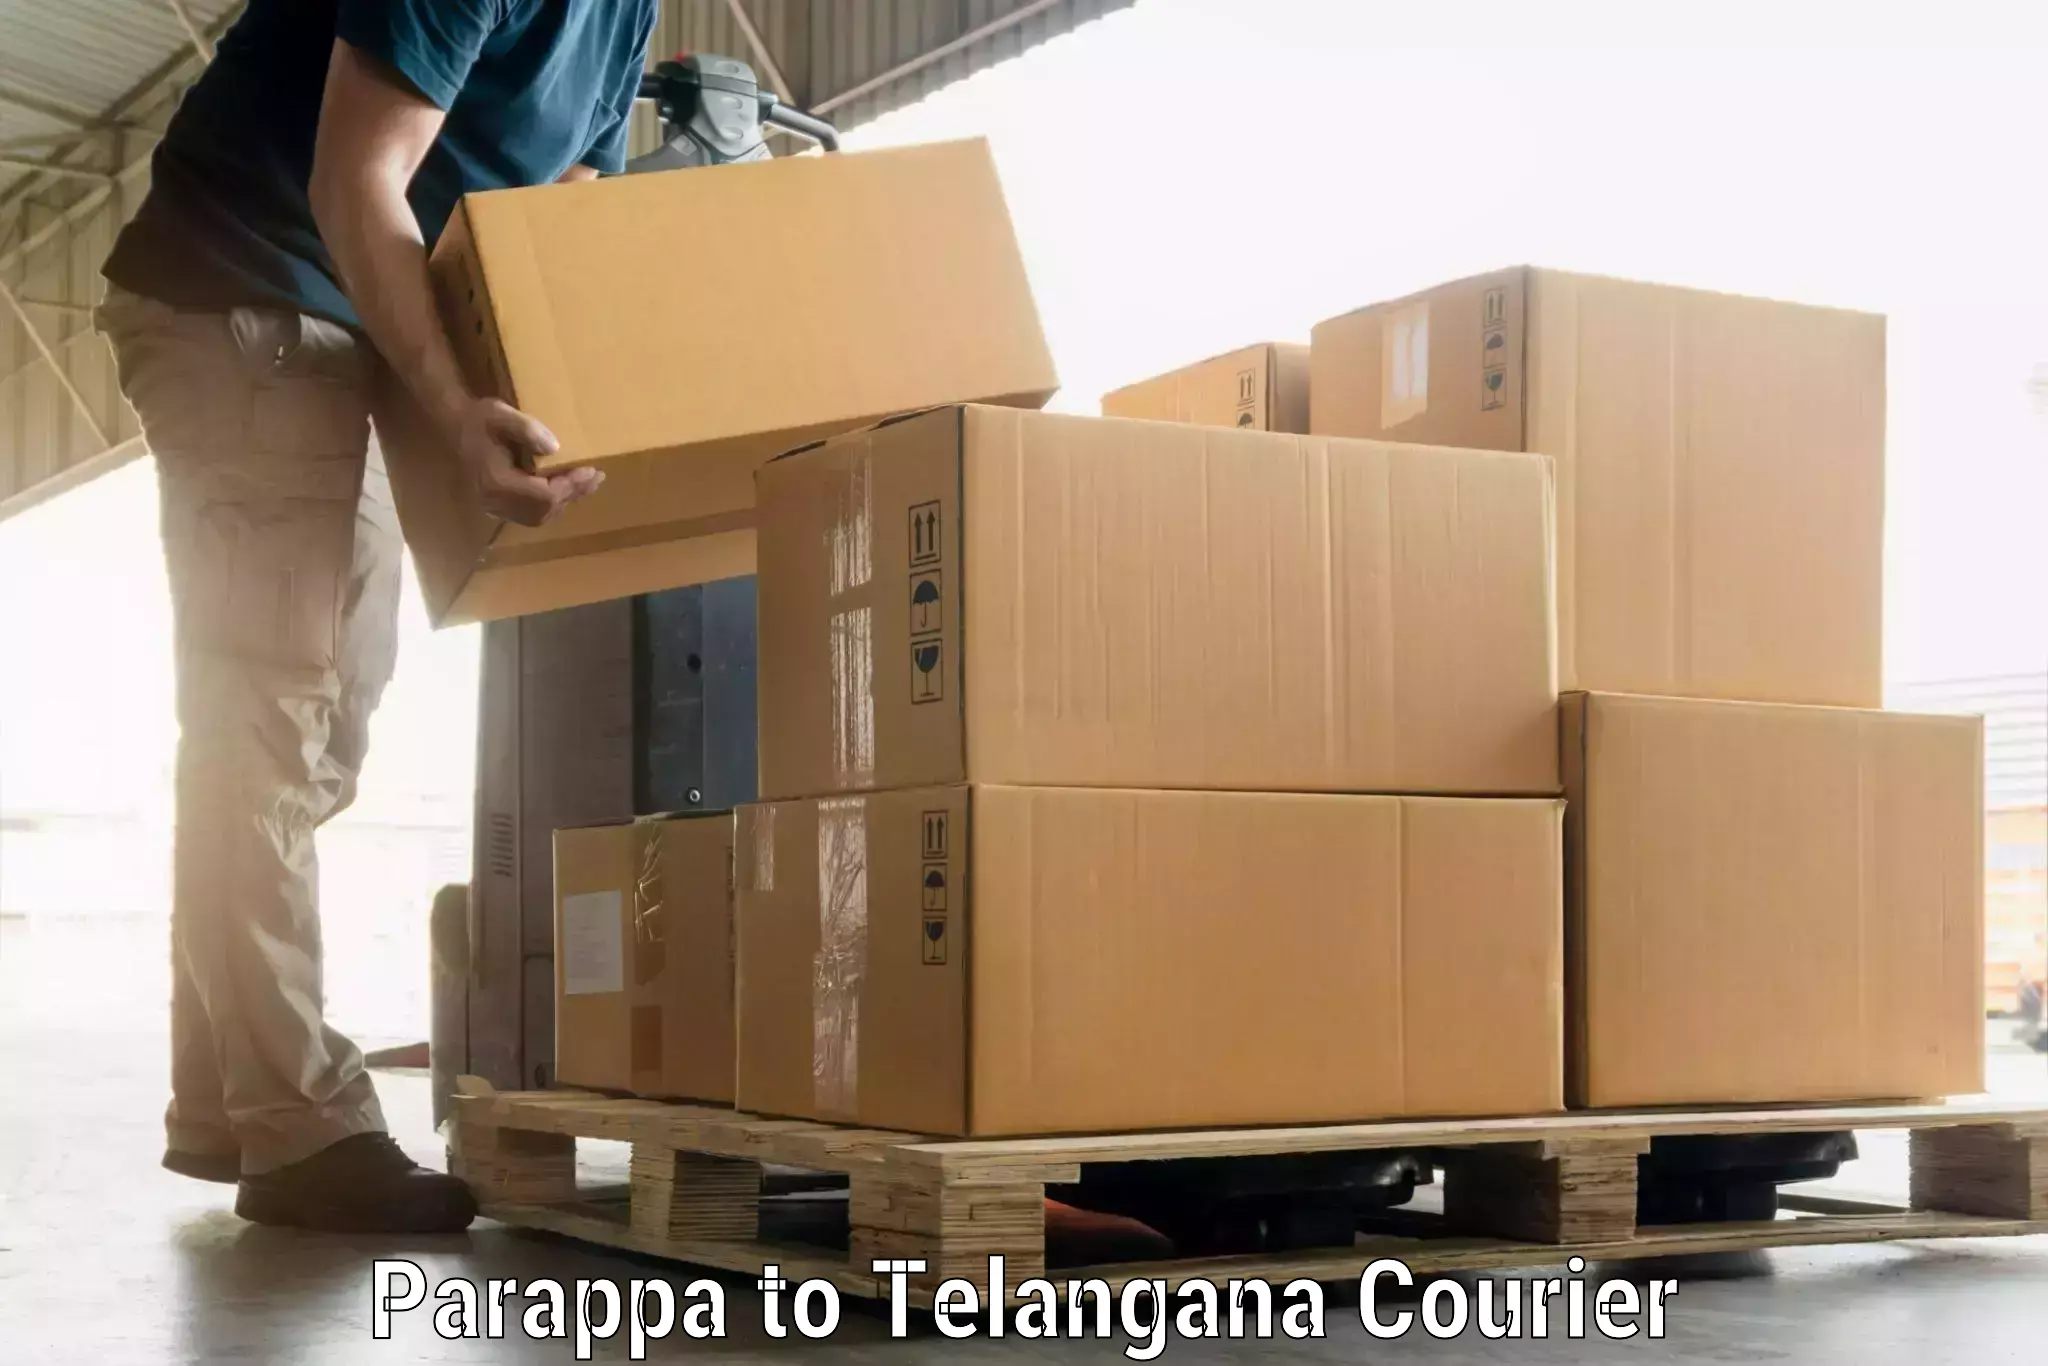 Luggage transport consultancy Parappa to Veenavanka